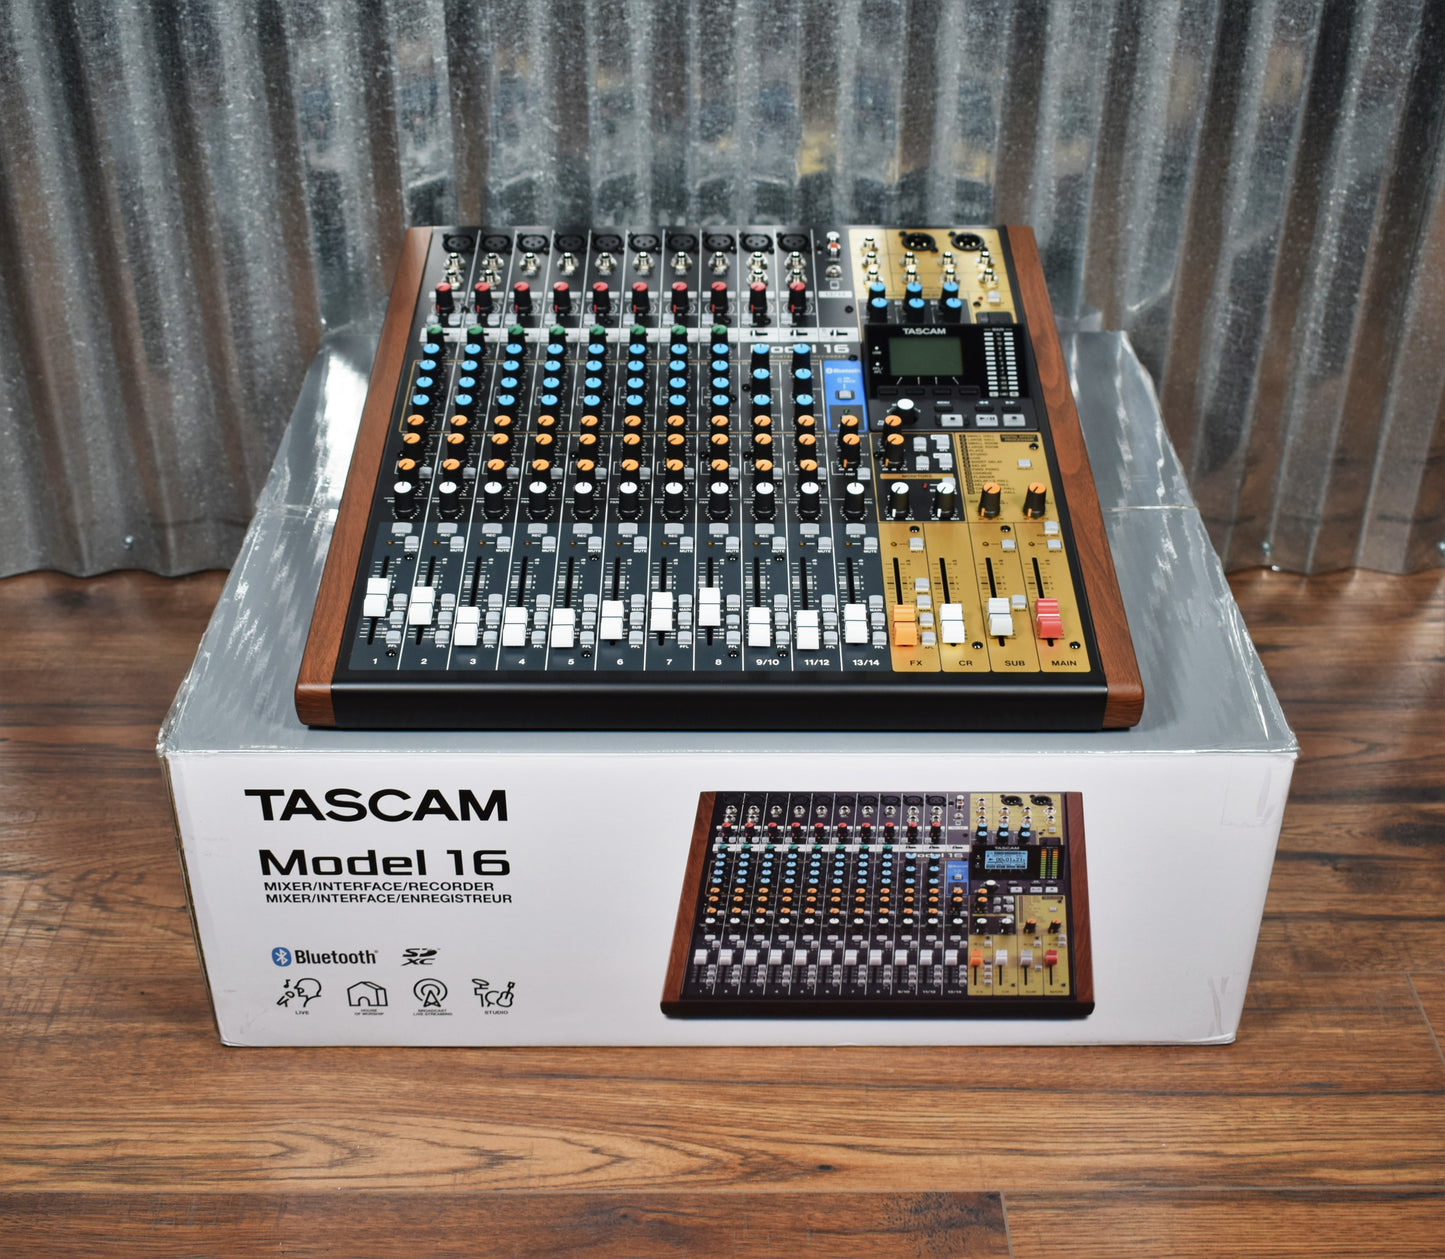 Tascam Model 16 Mixer USB Audio Interface Recorder Controller